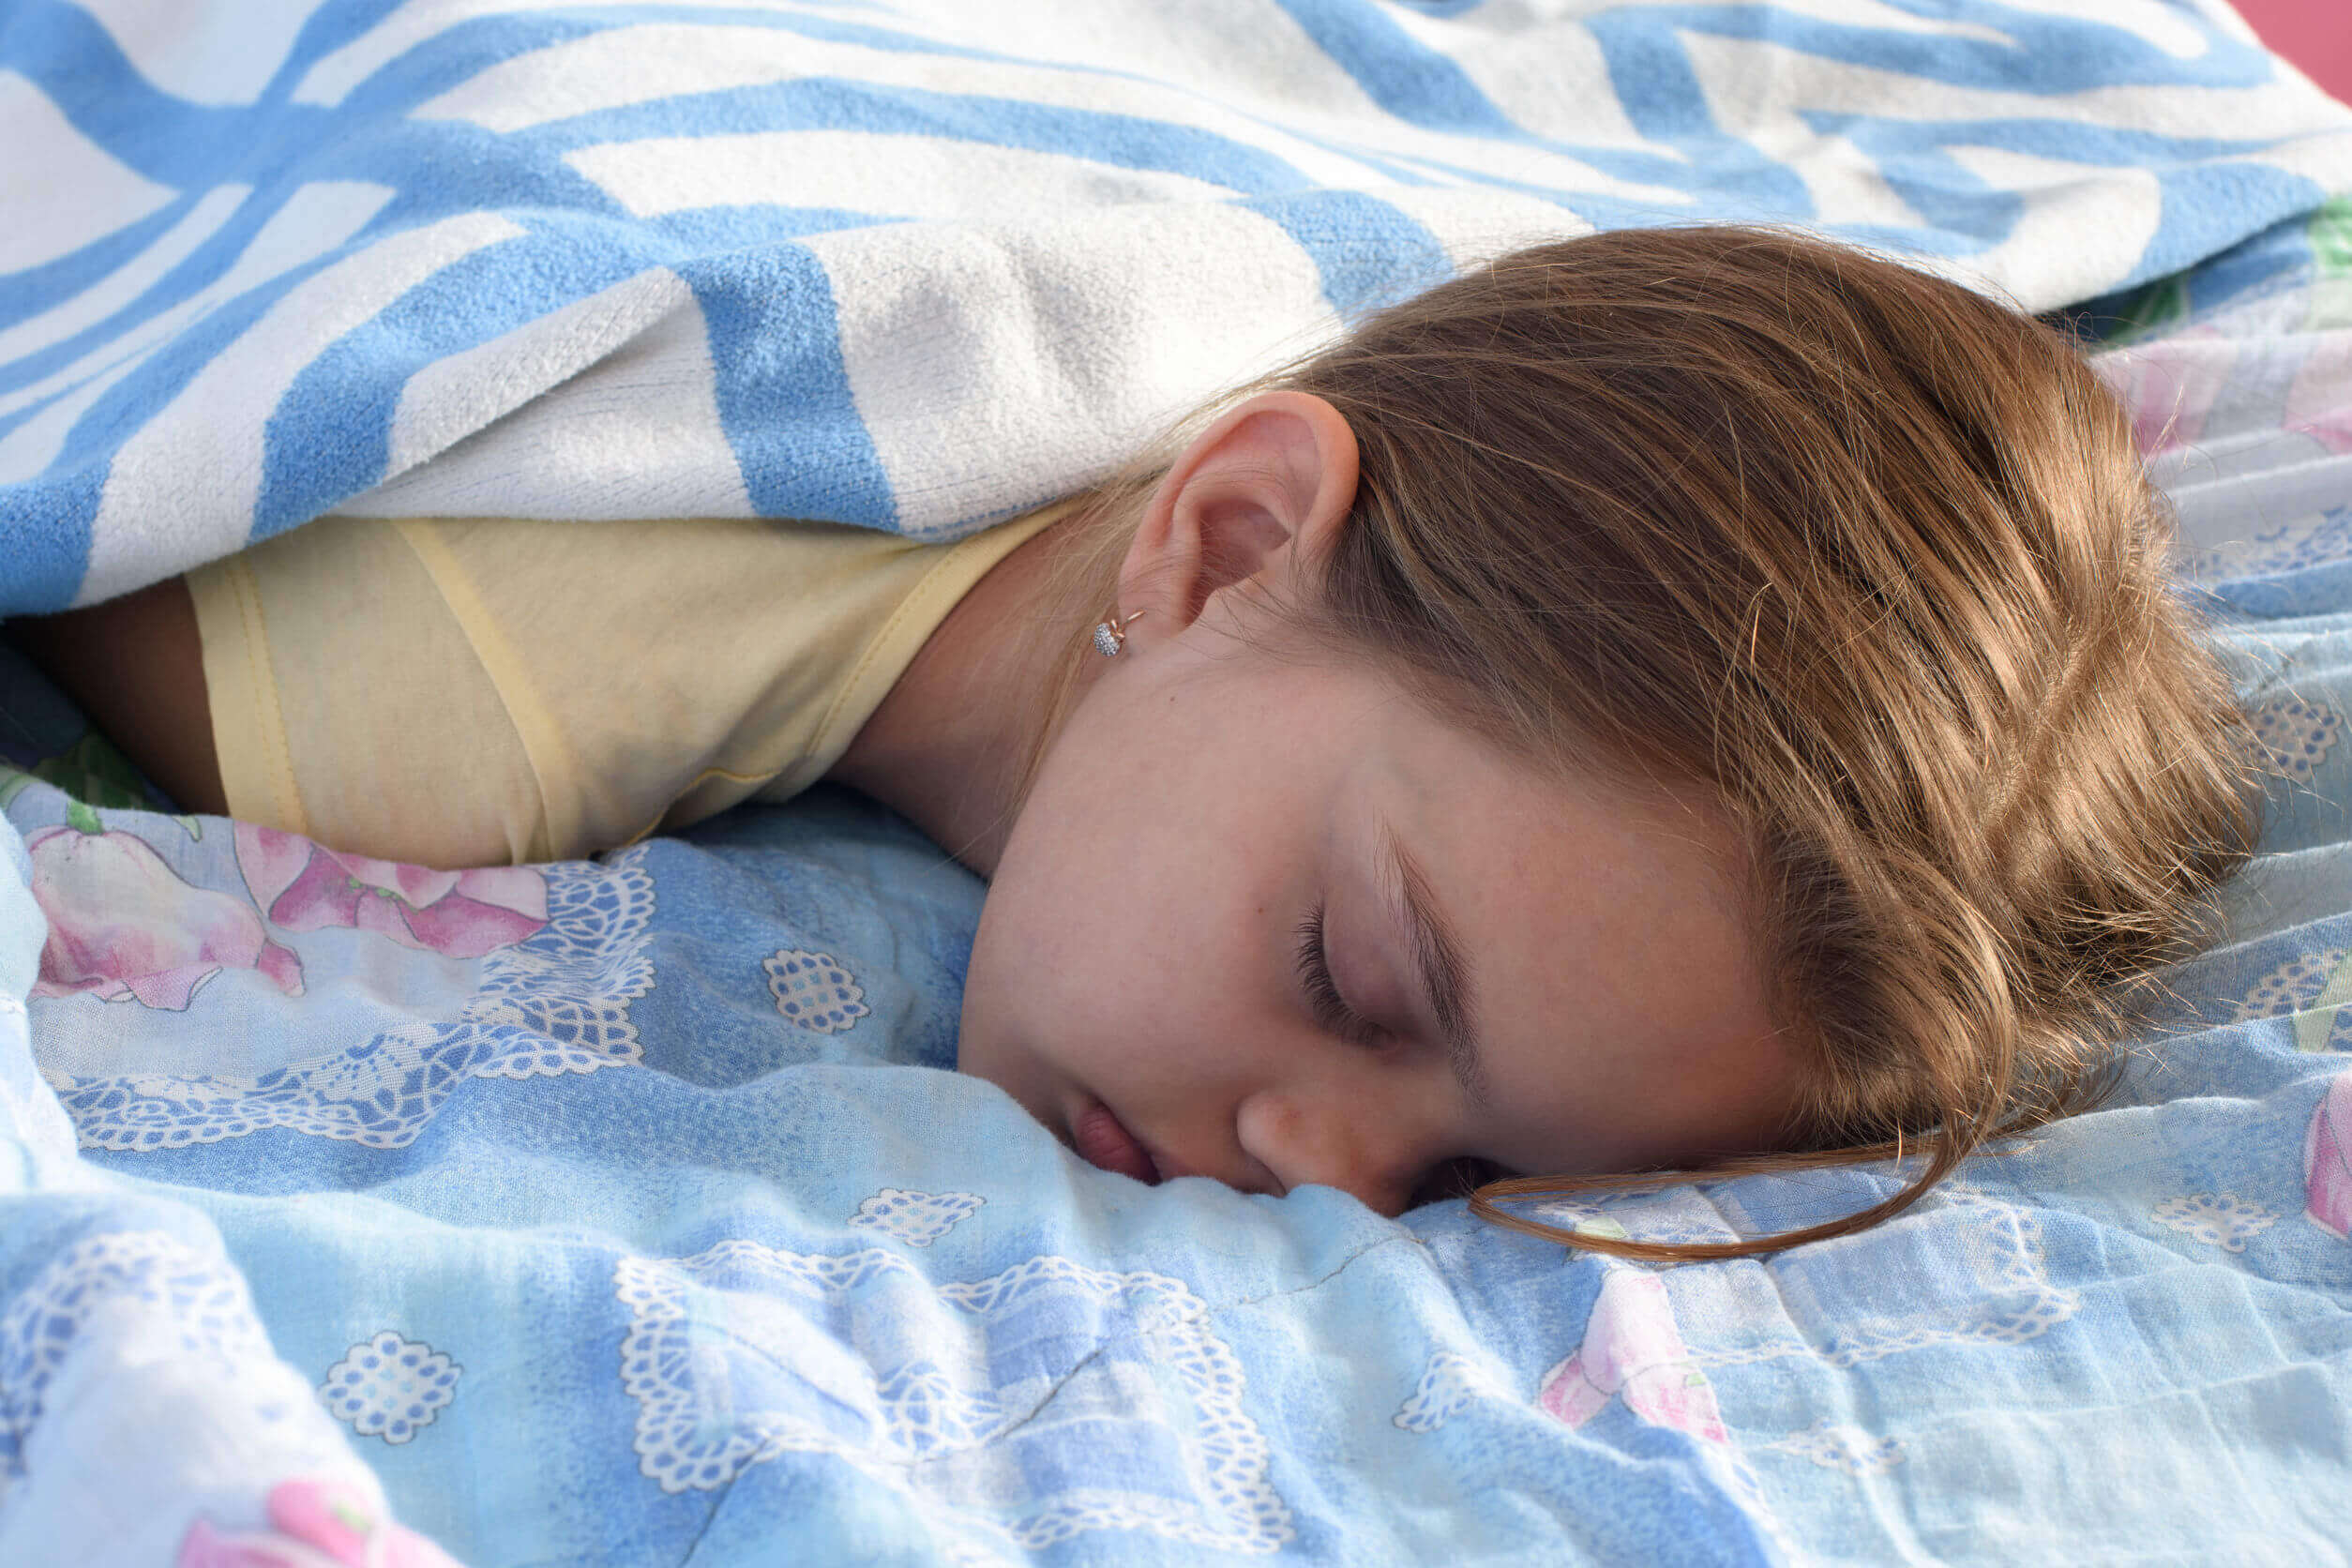 A teenage girl sleeping facedown on her bed.